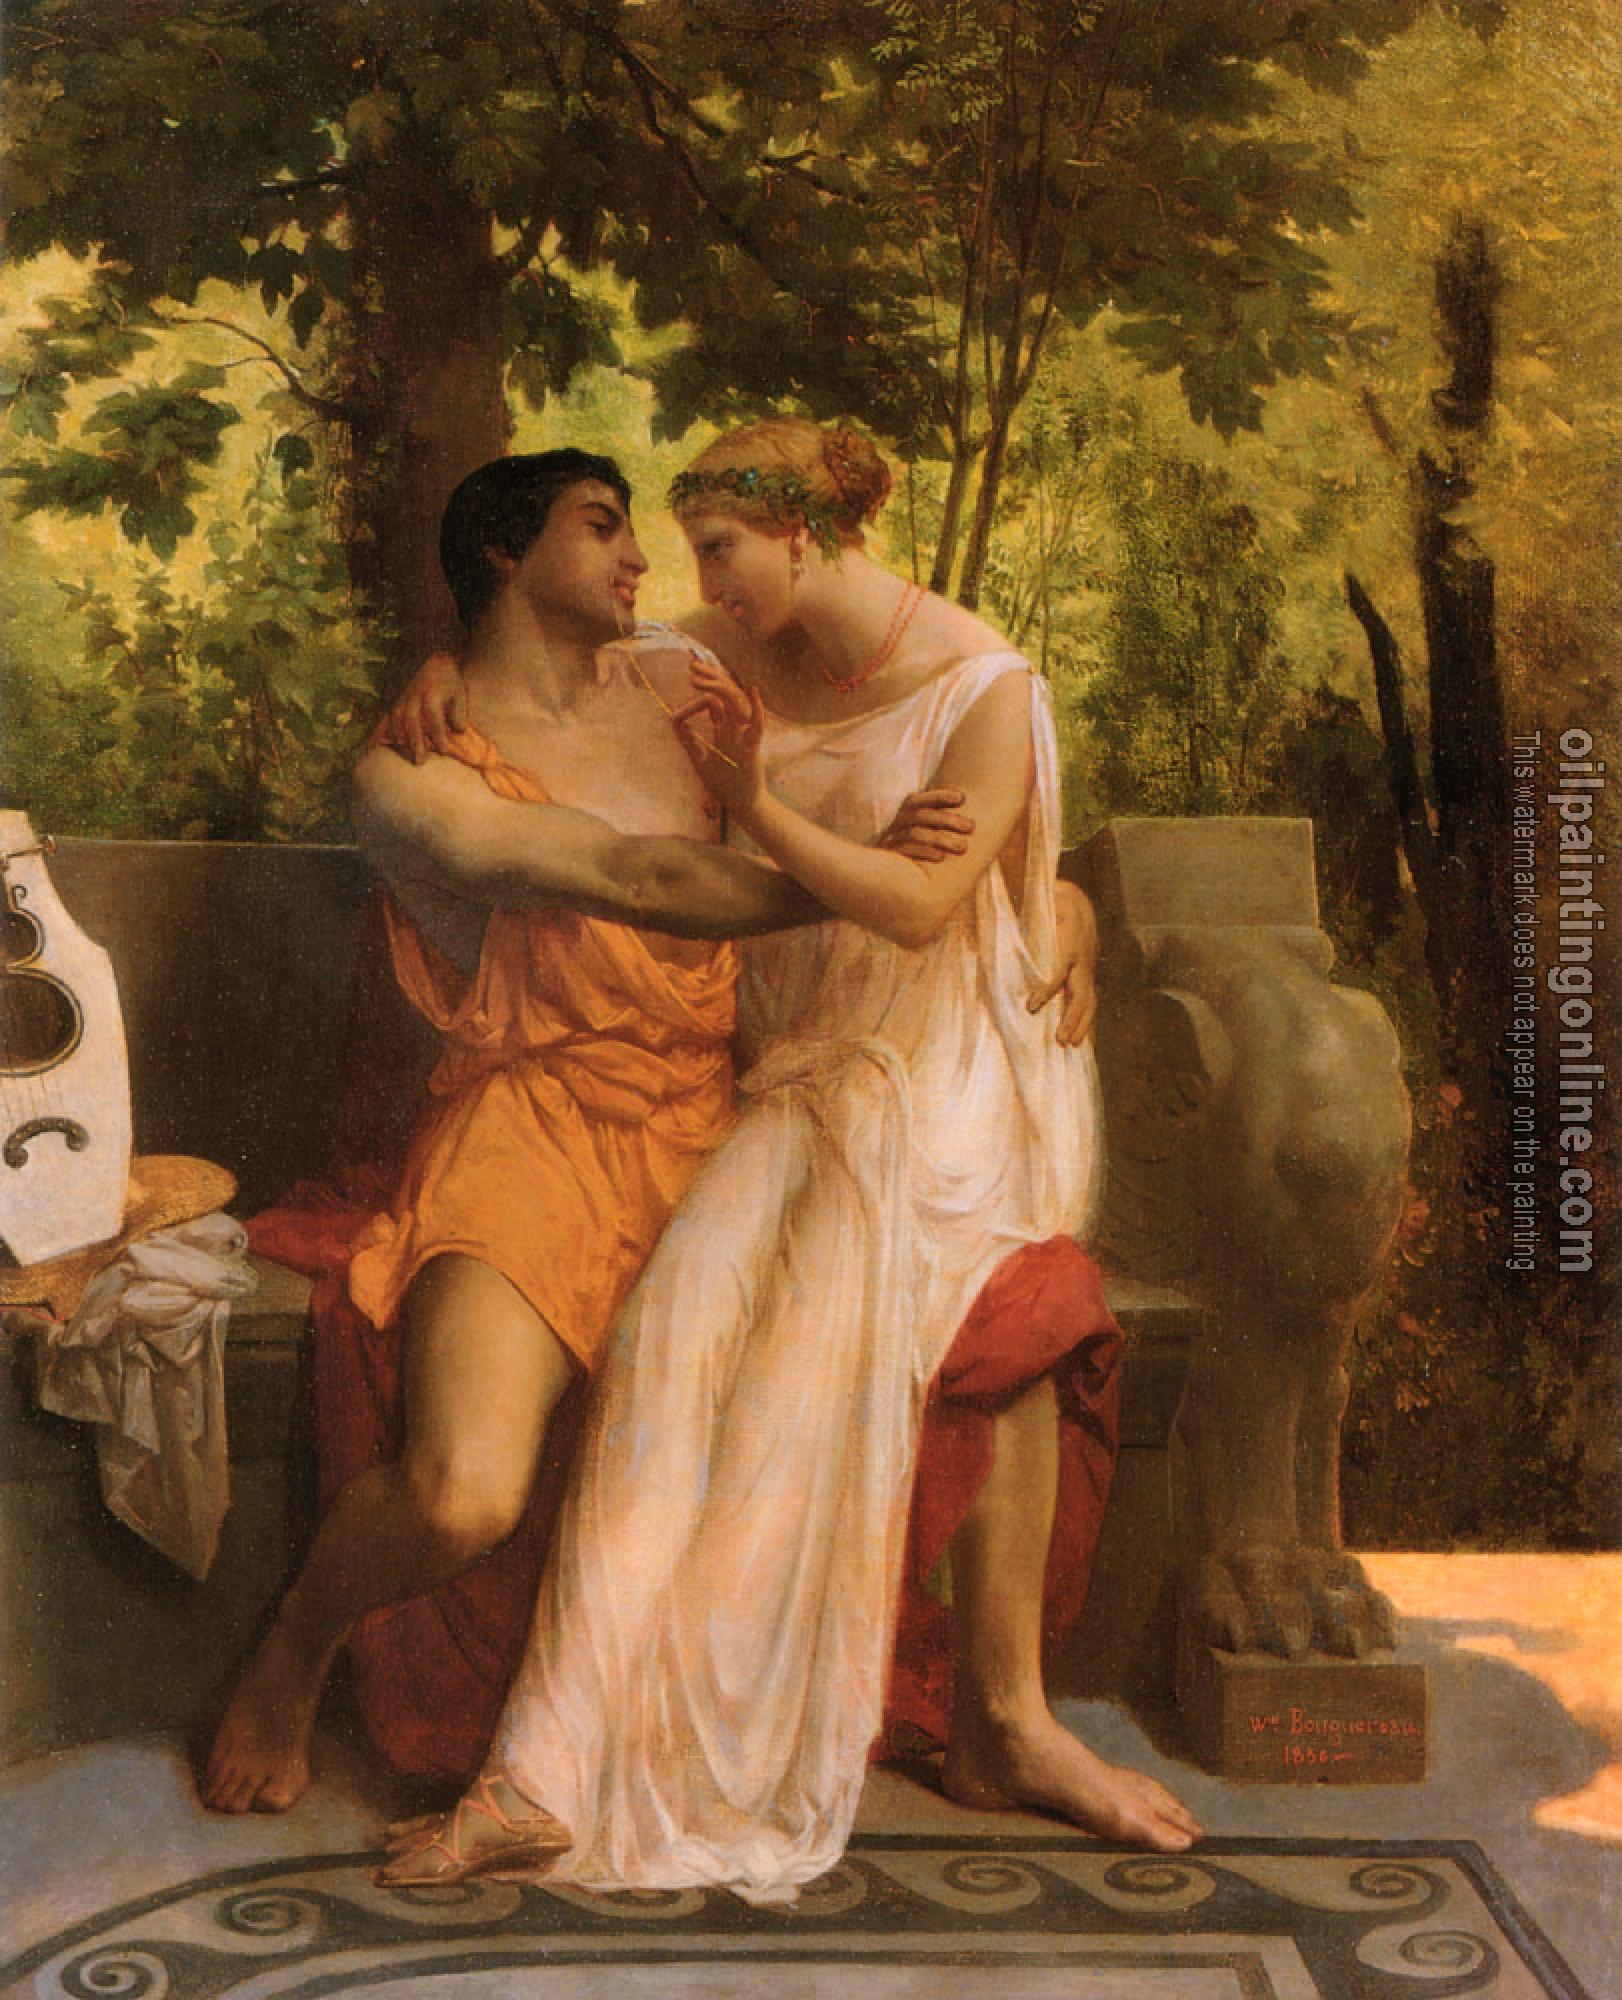 Bouguereau, William-Adolphe - L'idylle, The Idyll